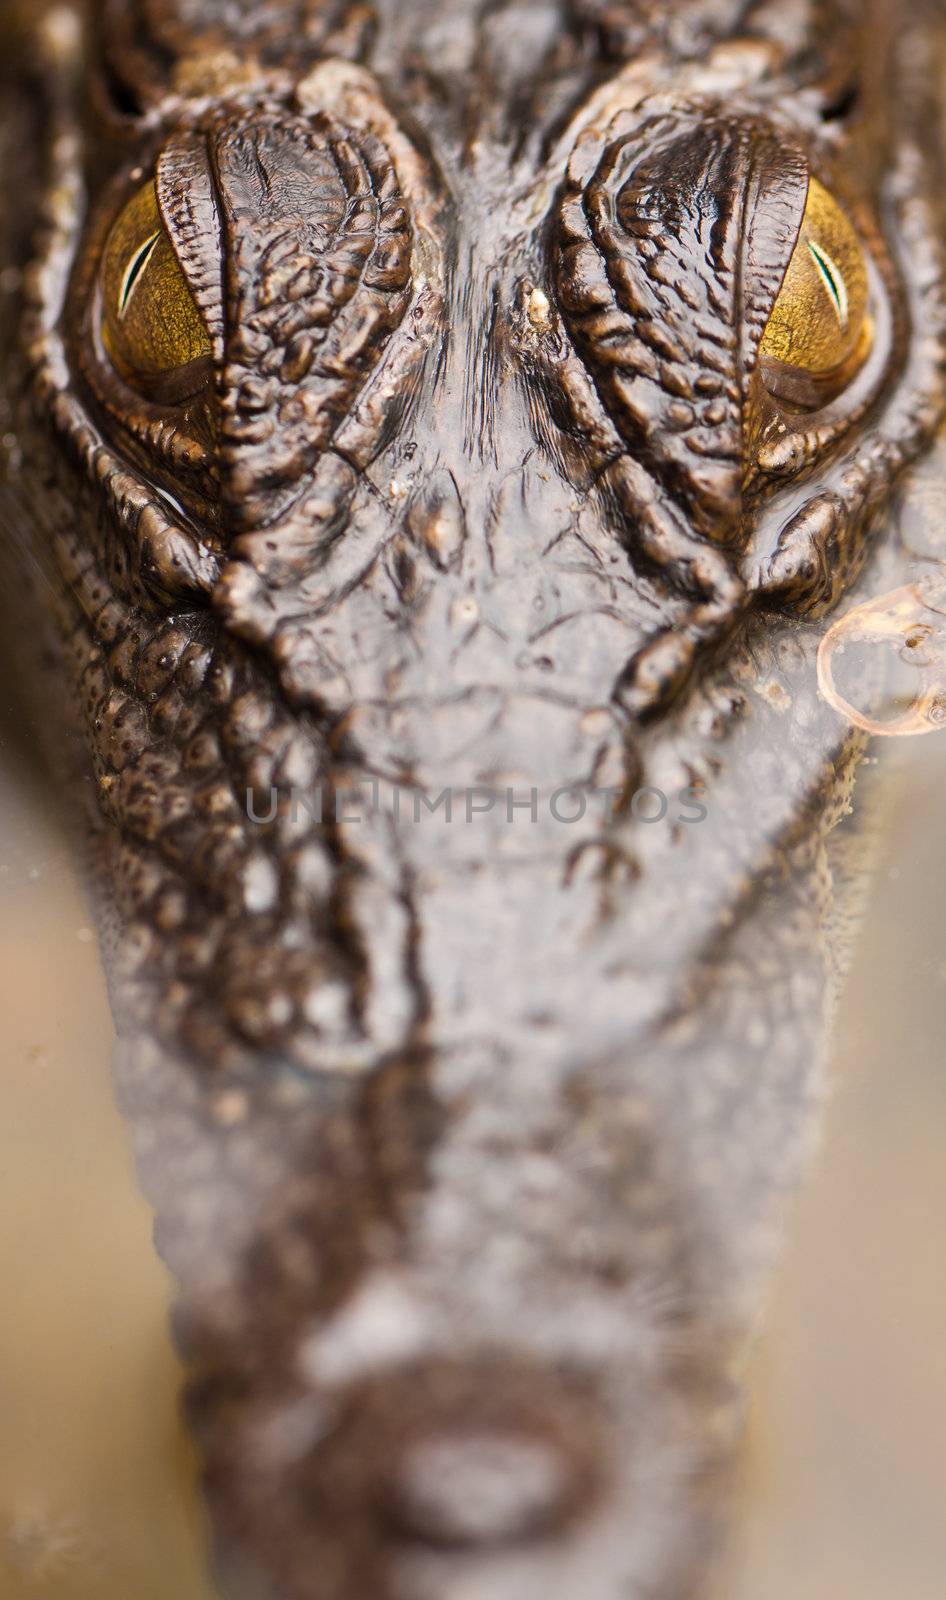 A close-up shot of a salt water crocodile (Crocodylus porosus)